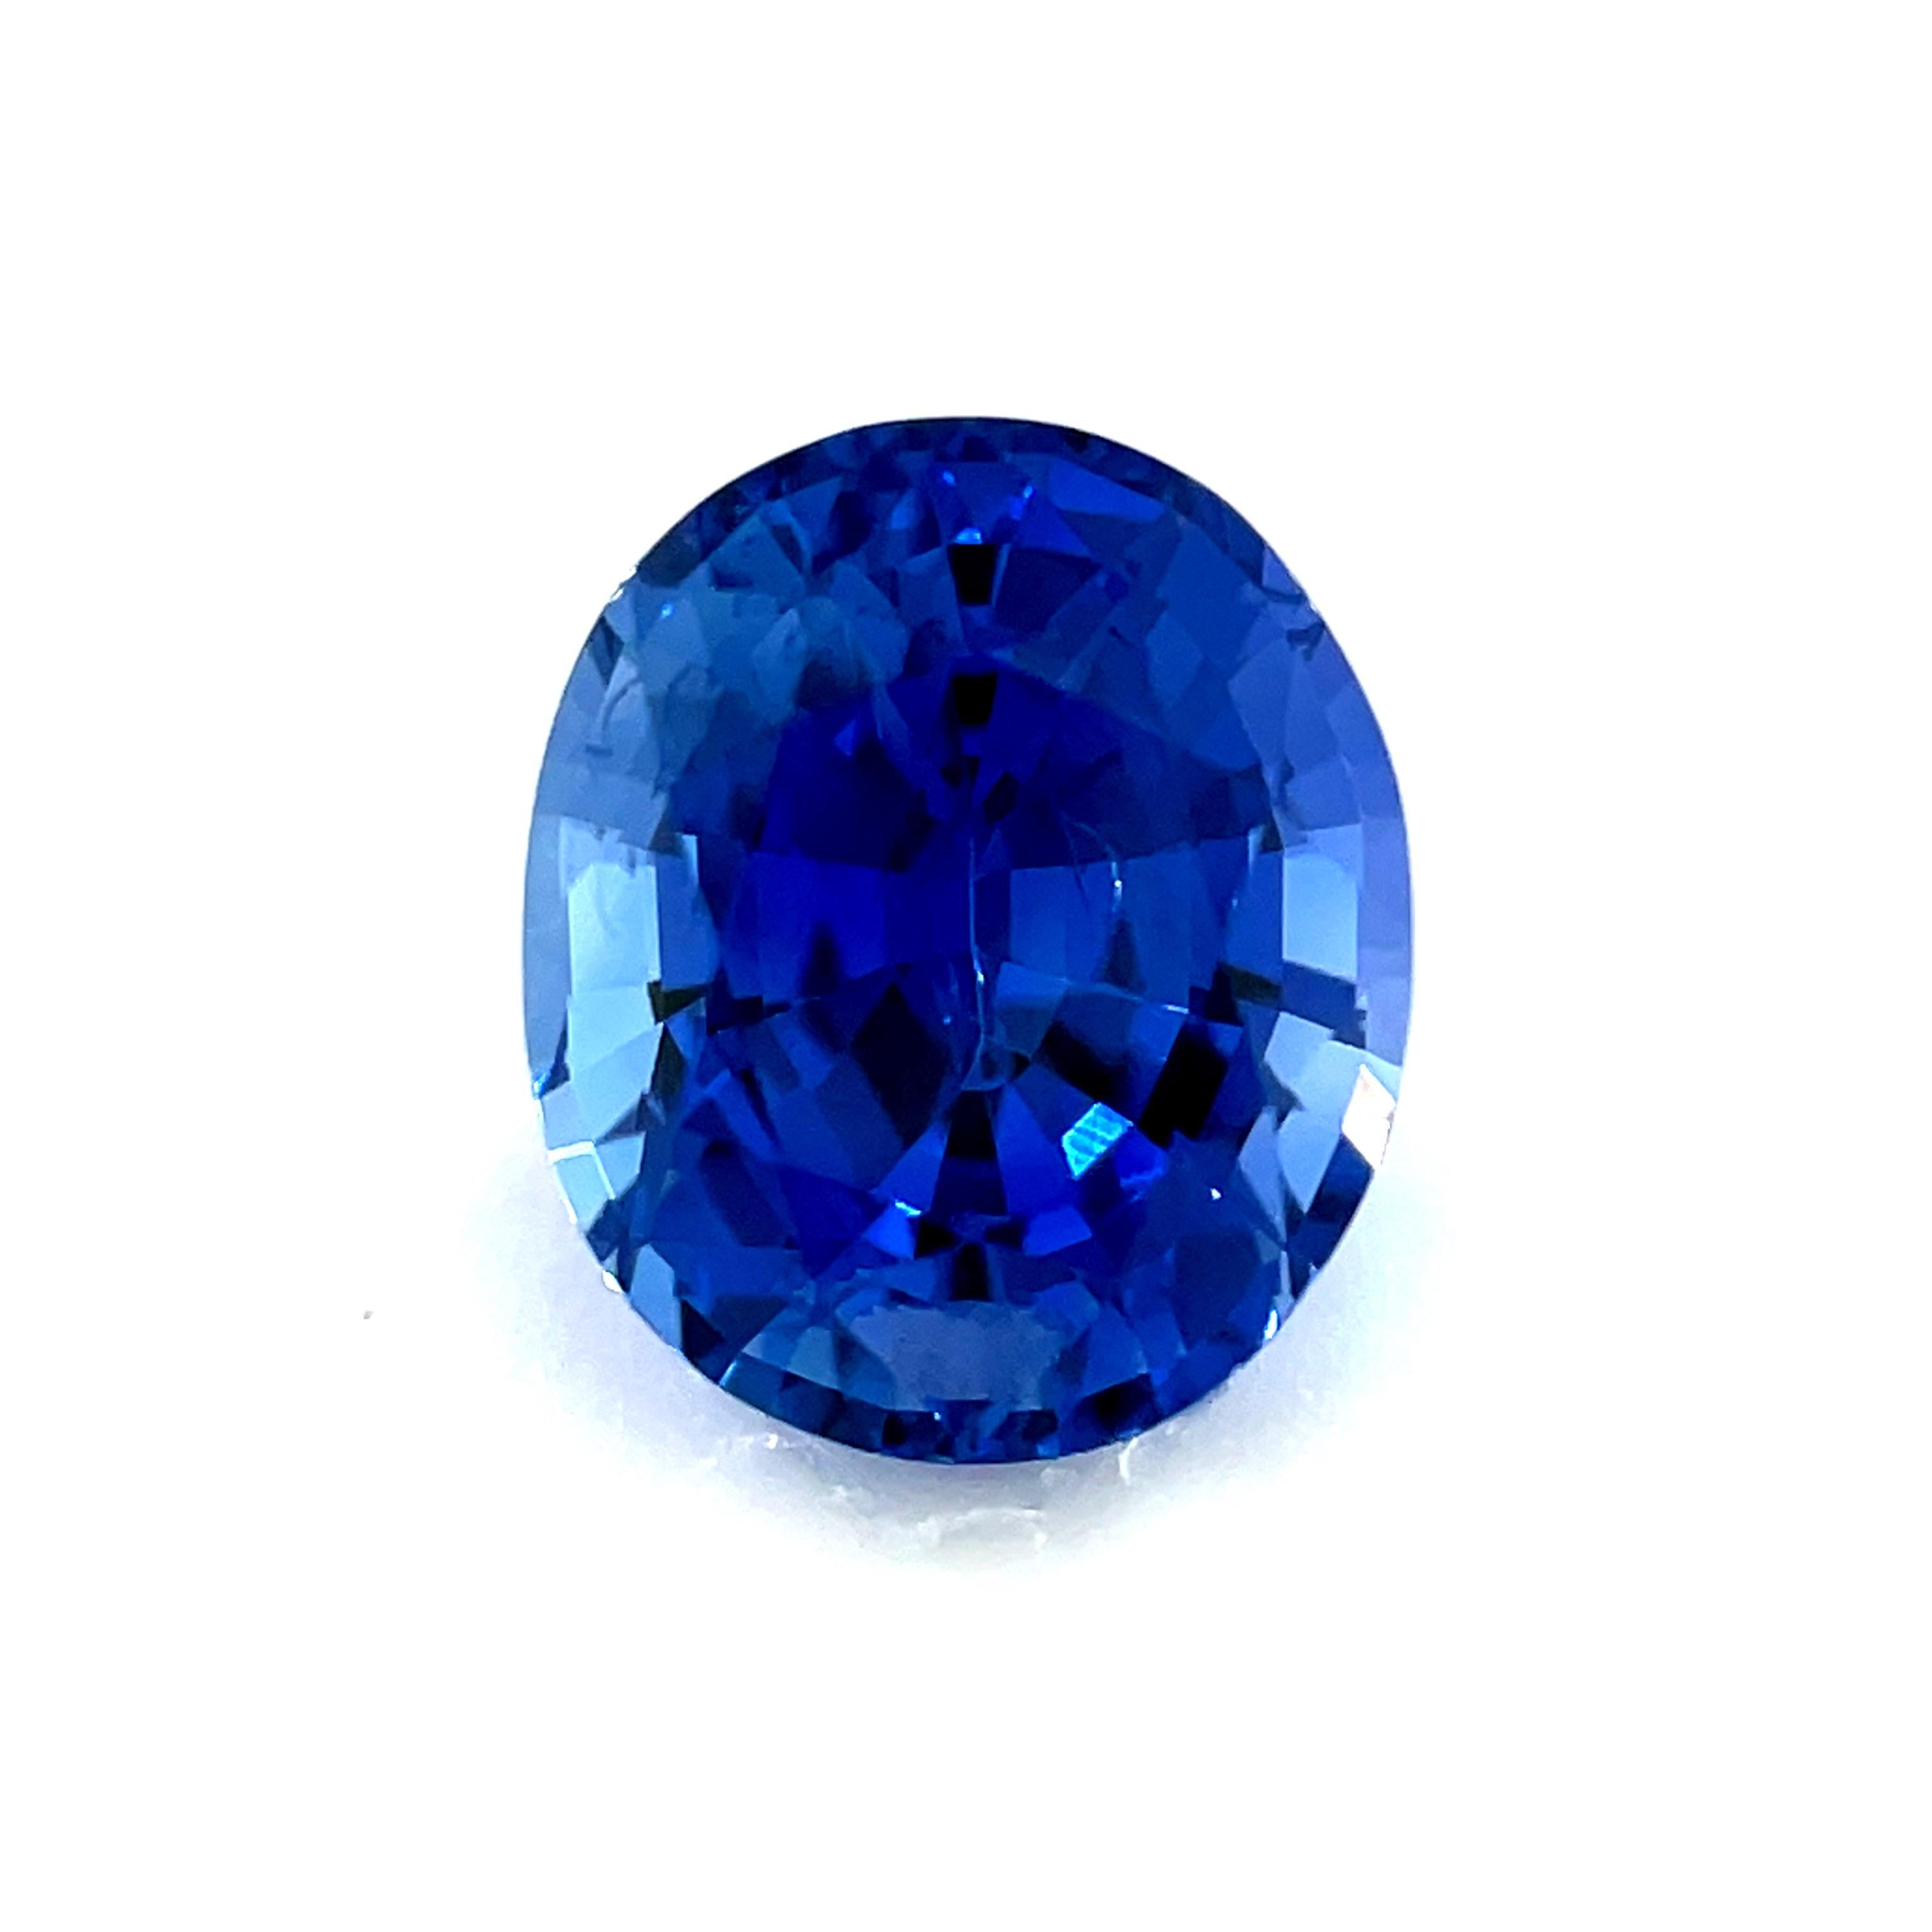 Oval Cut 2.39 Carat Unheated Madagascar Blue Sapphire, Loose Gemstone, GIA Certified For Sale